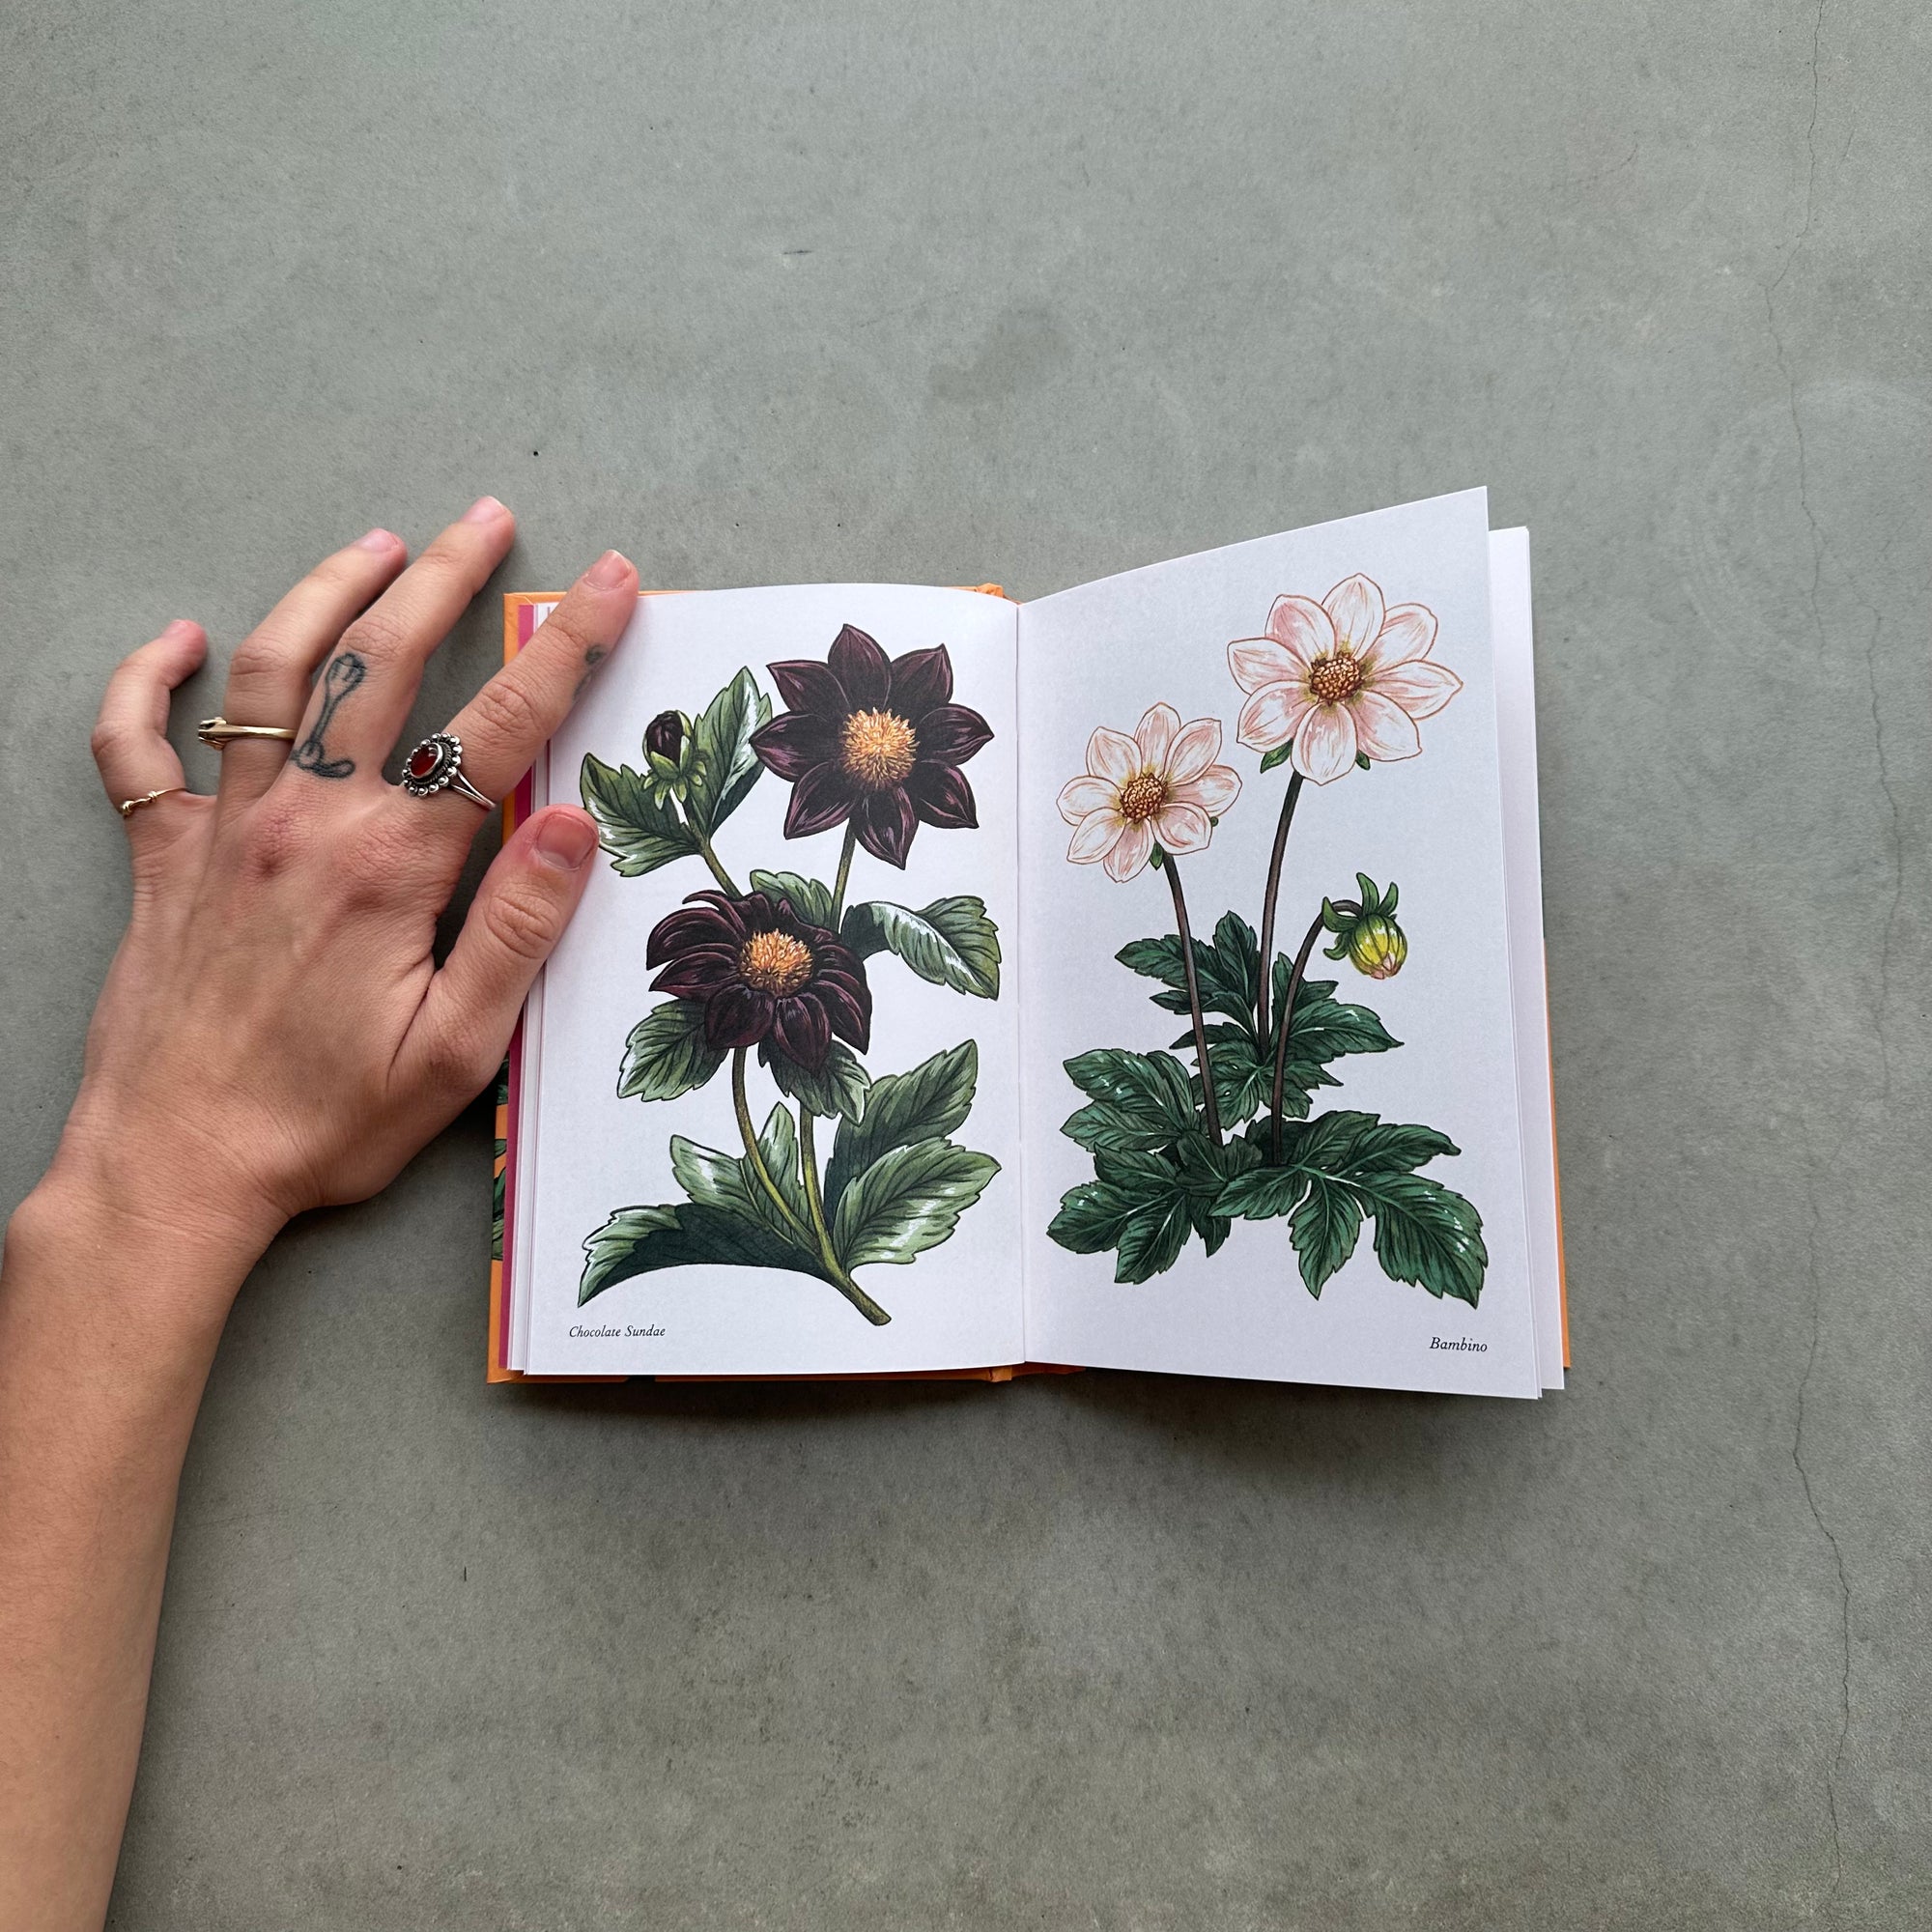 Flower book